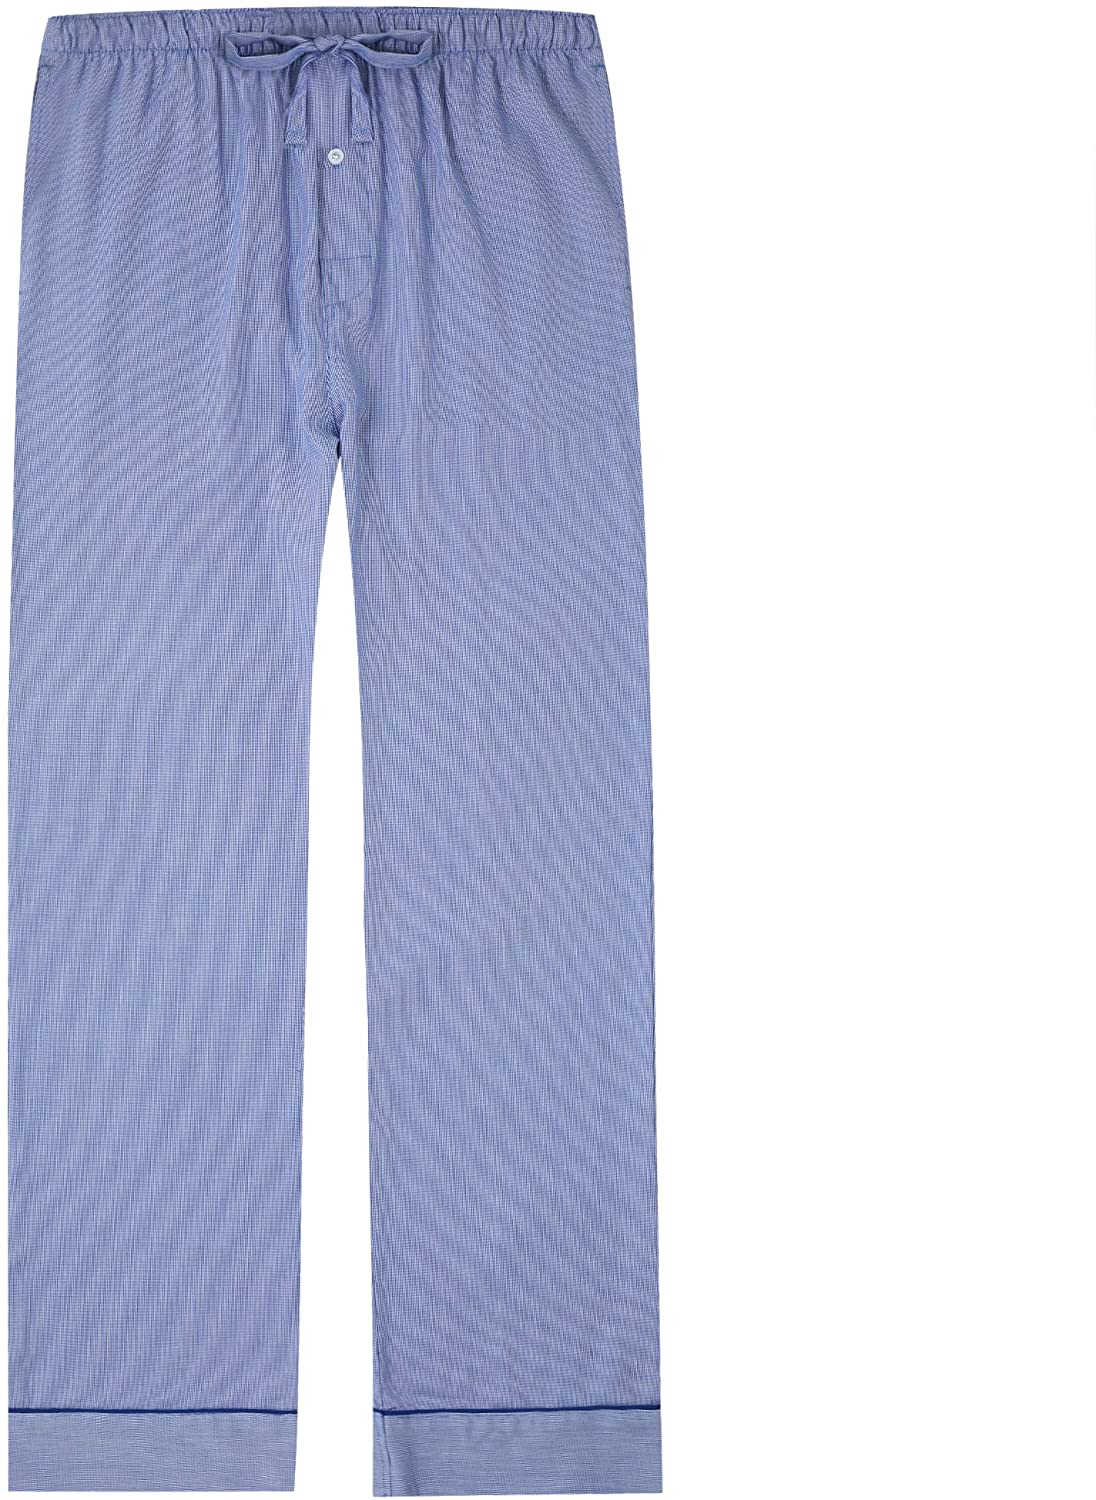 Men's Supima Pajama Pants | Lands' End